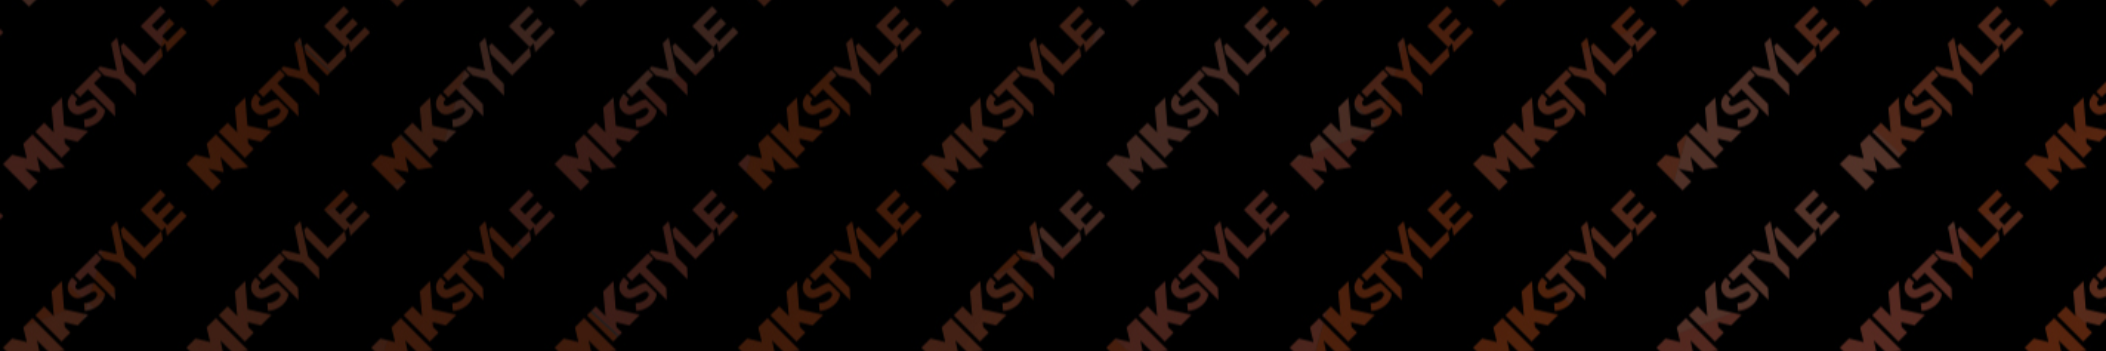 Mkstyle